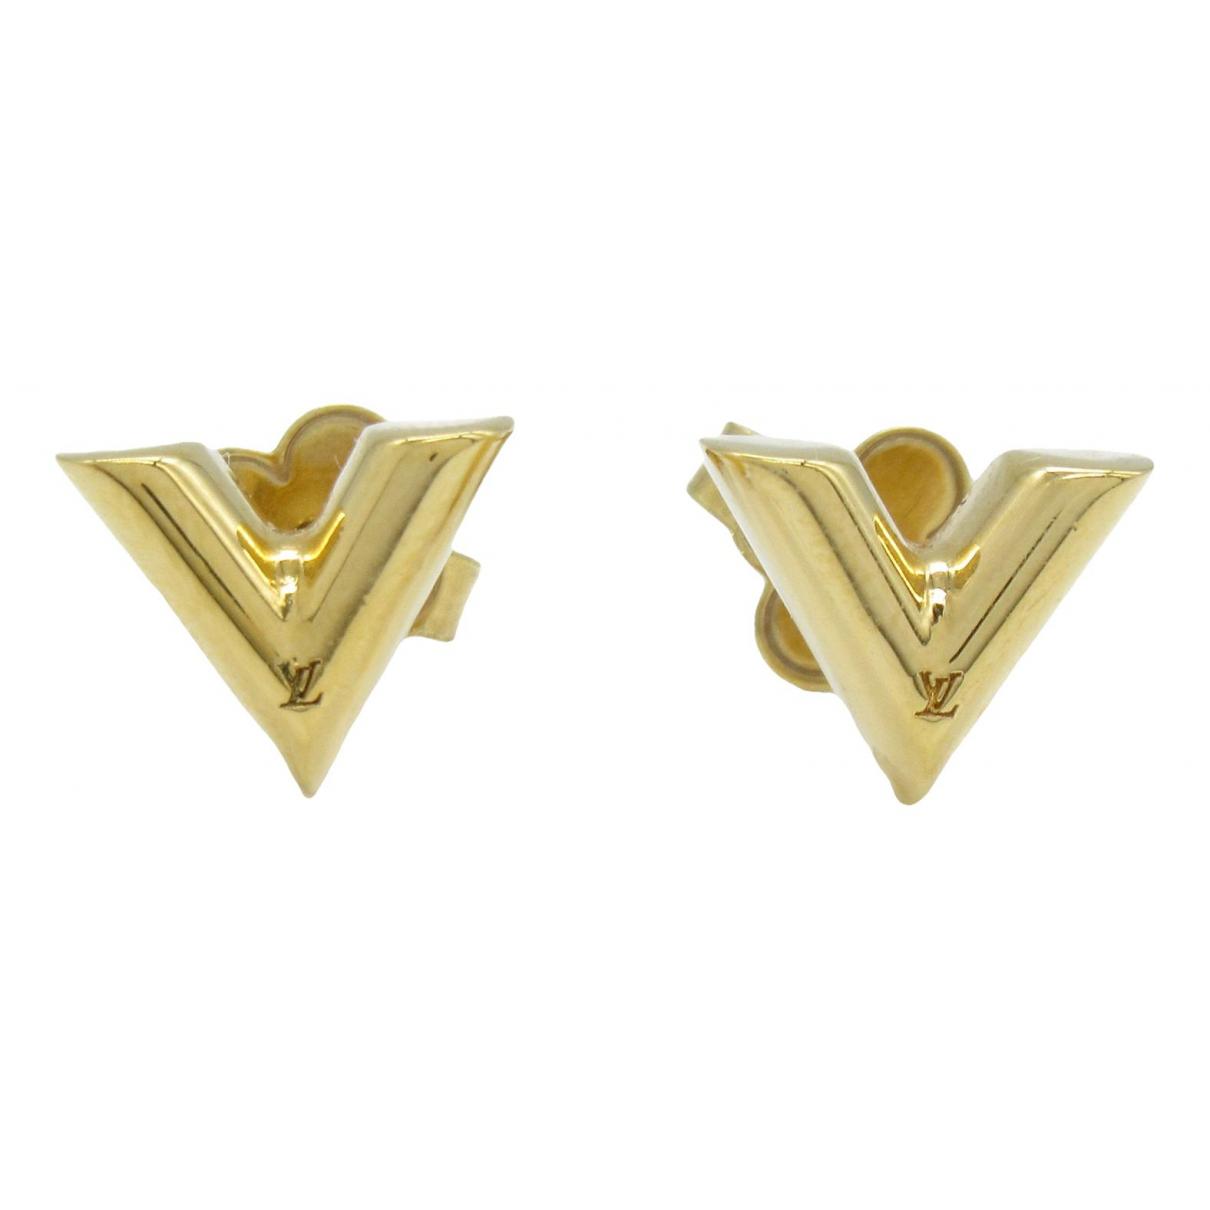 Shop Louis Vuitton Nanogram earrings (M00397) by WaterIsland84